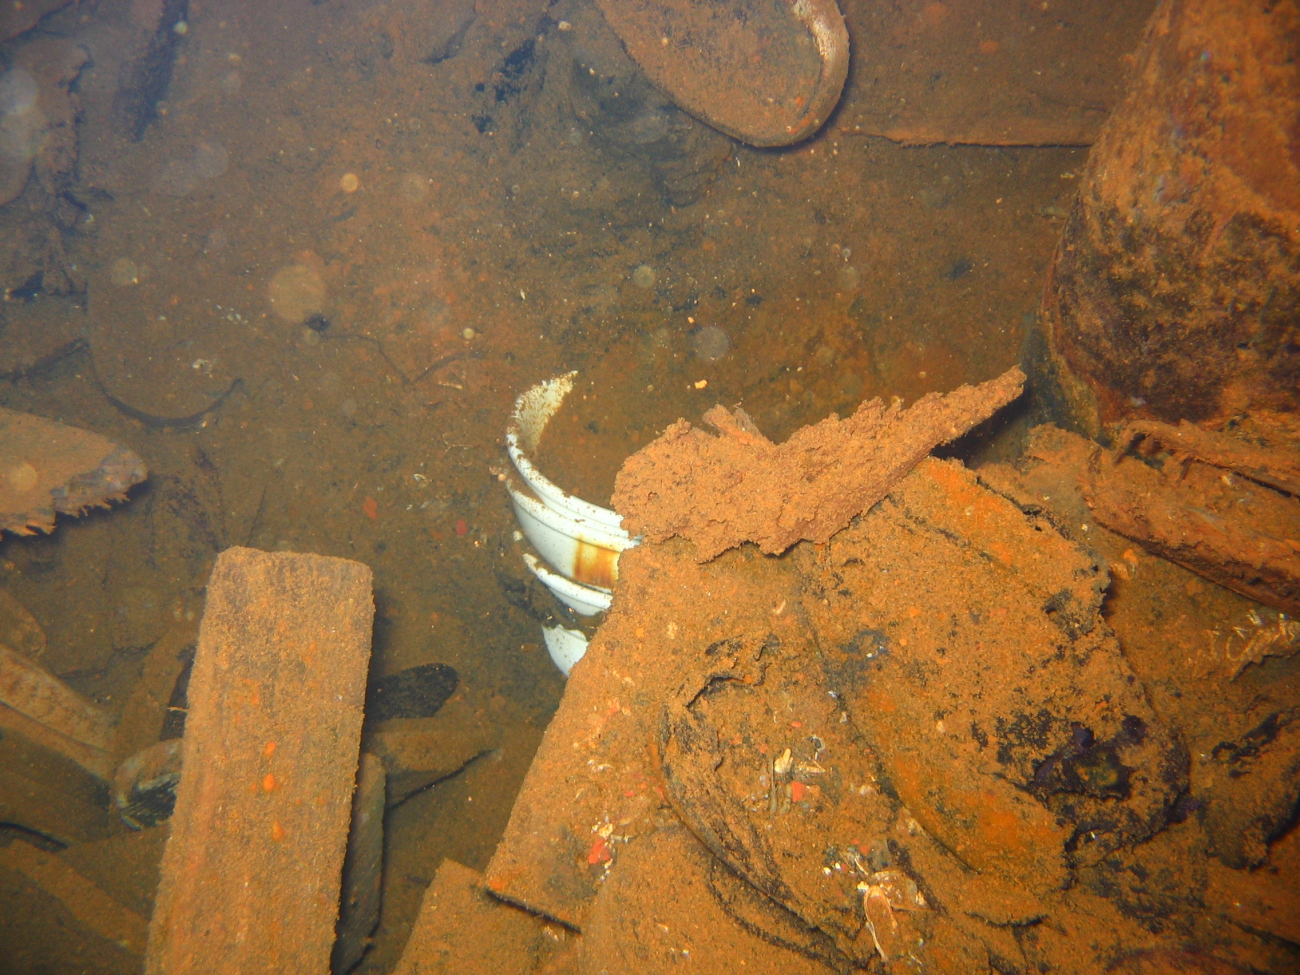 Assorted debris on the Unikai Maru